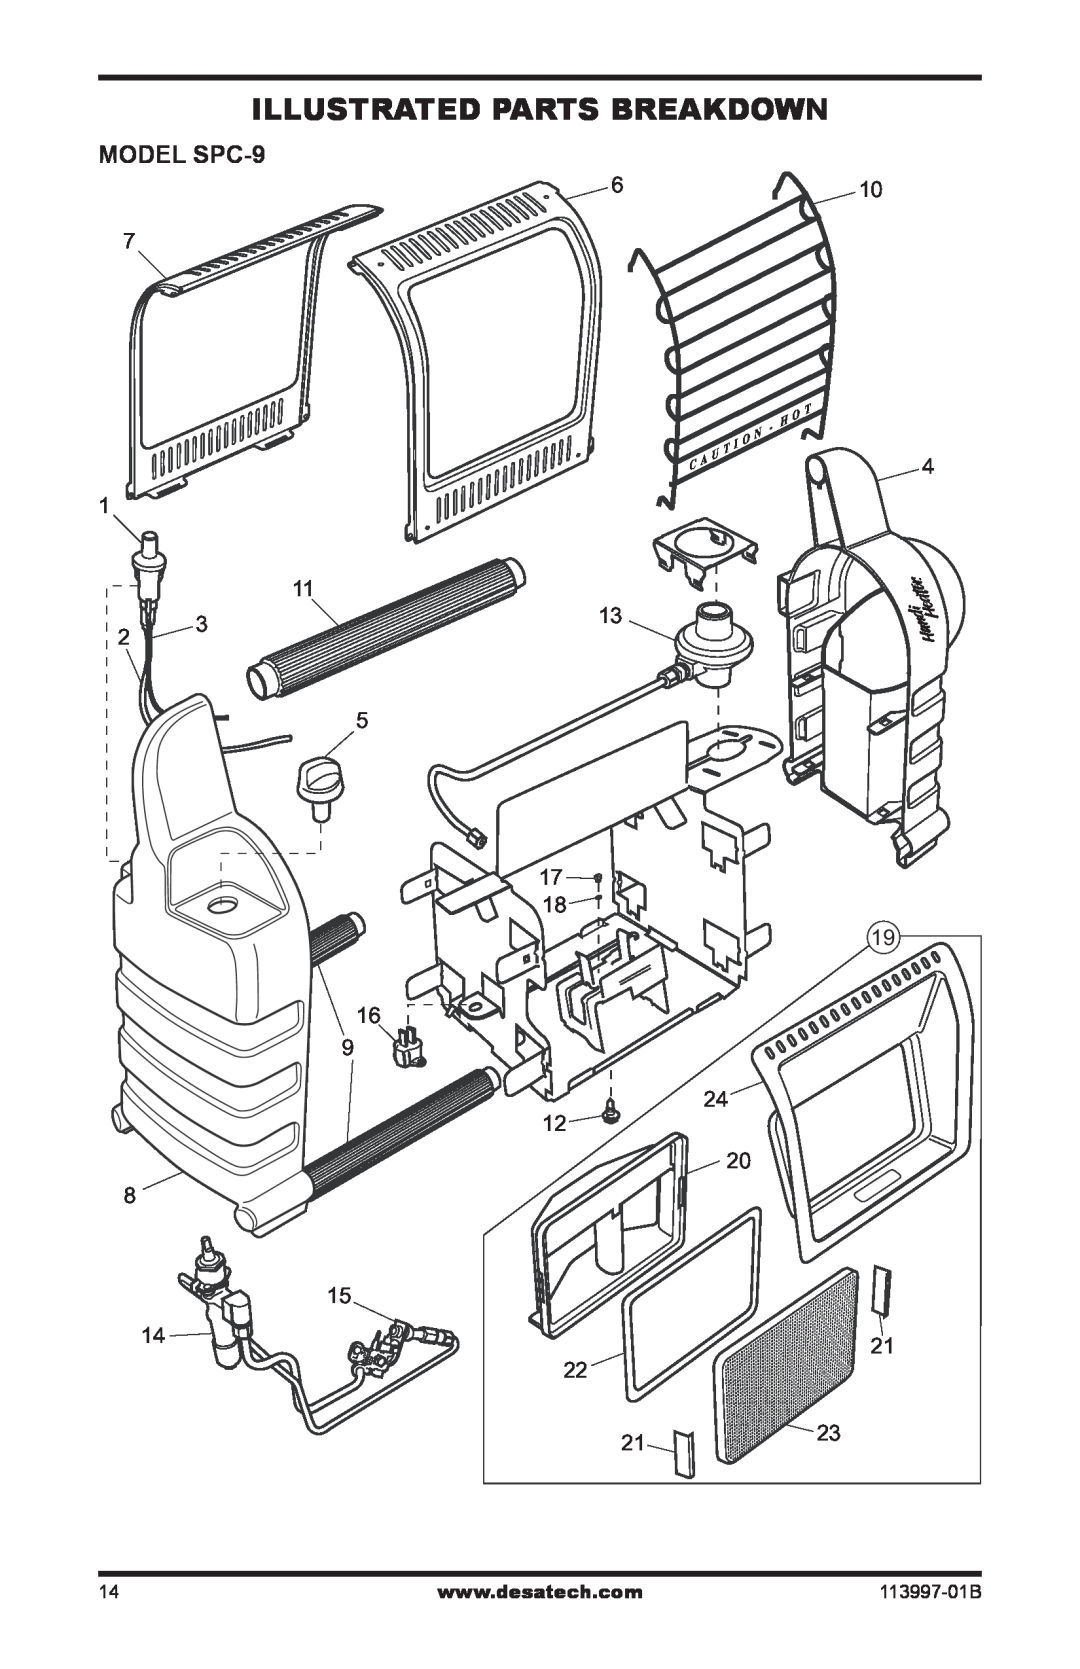 Desa PORTABLE PROPANE/LP HEATER installation manual Illustrated Parts Breakdown, MODEL SPC-9 